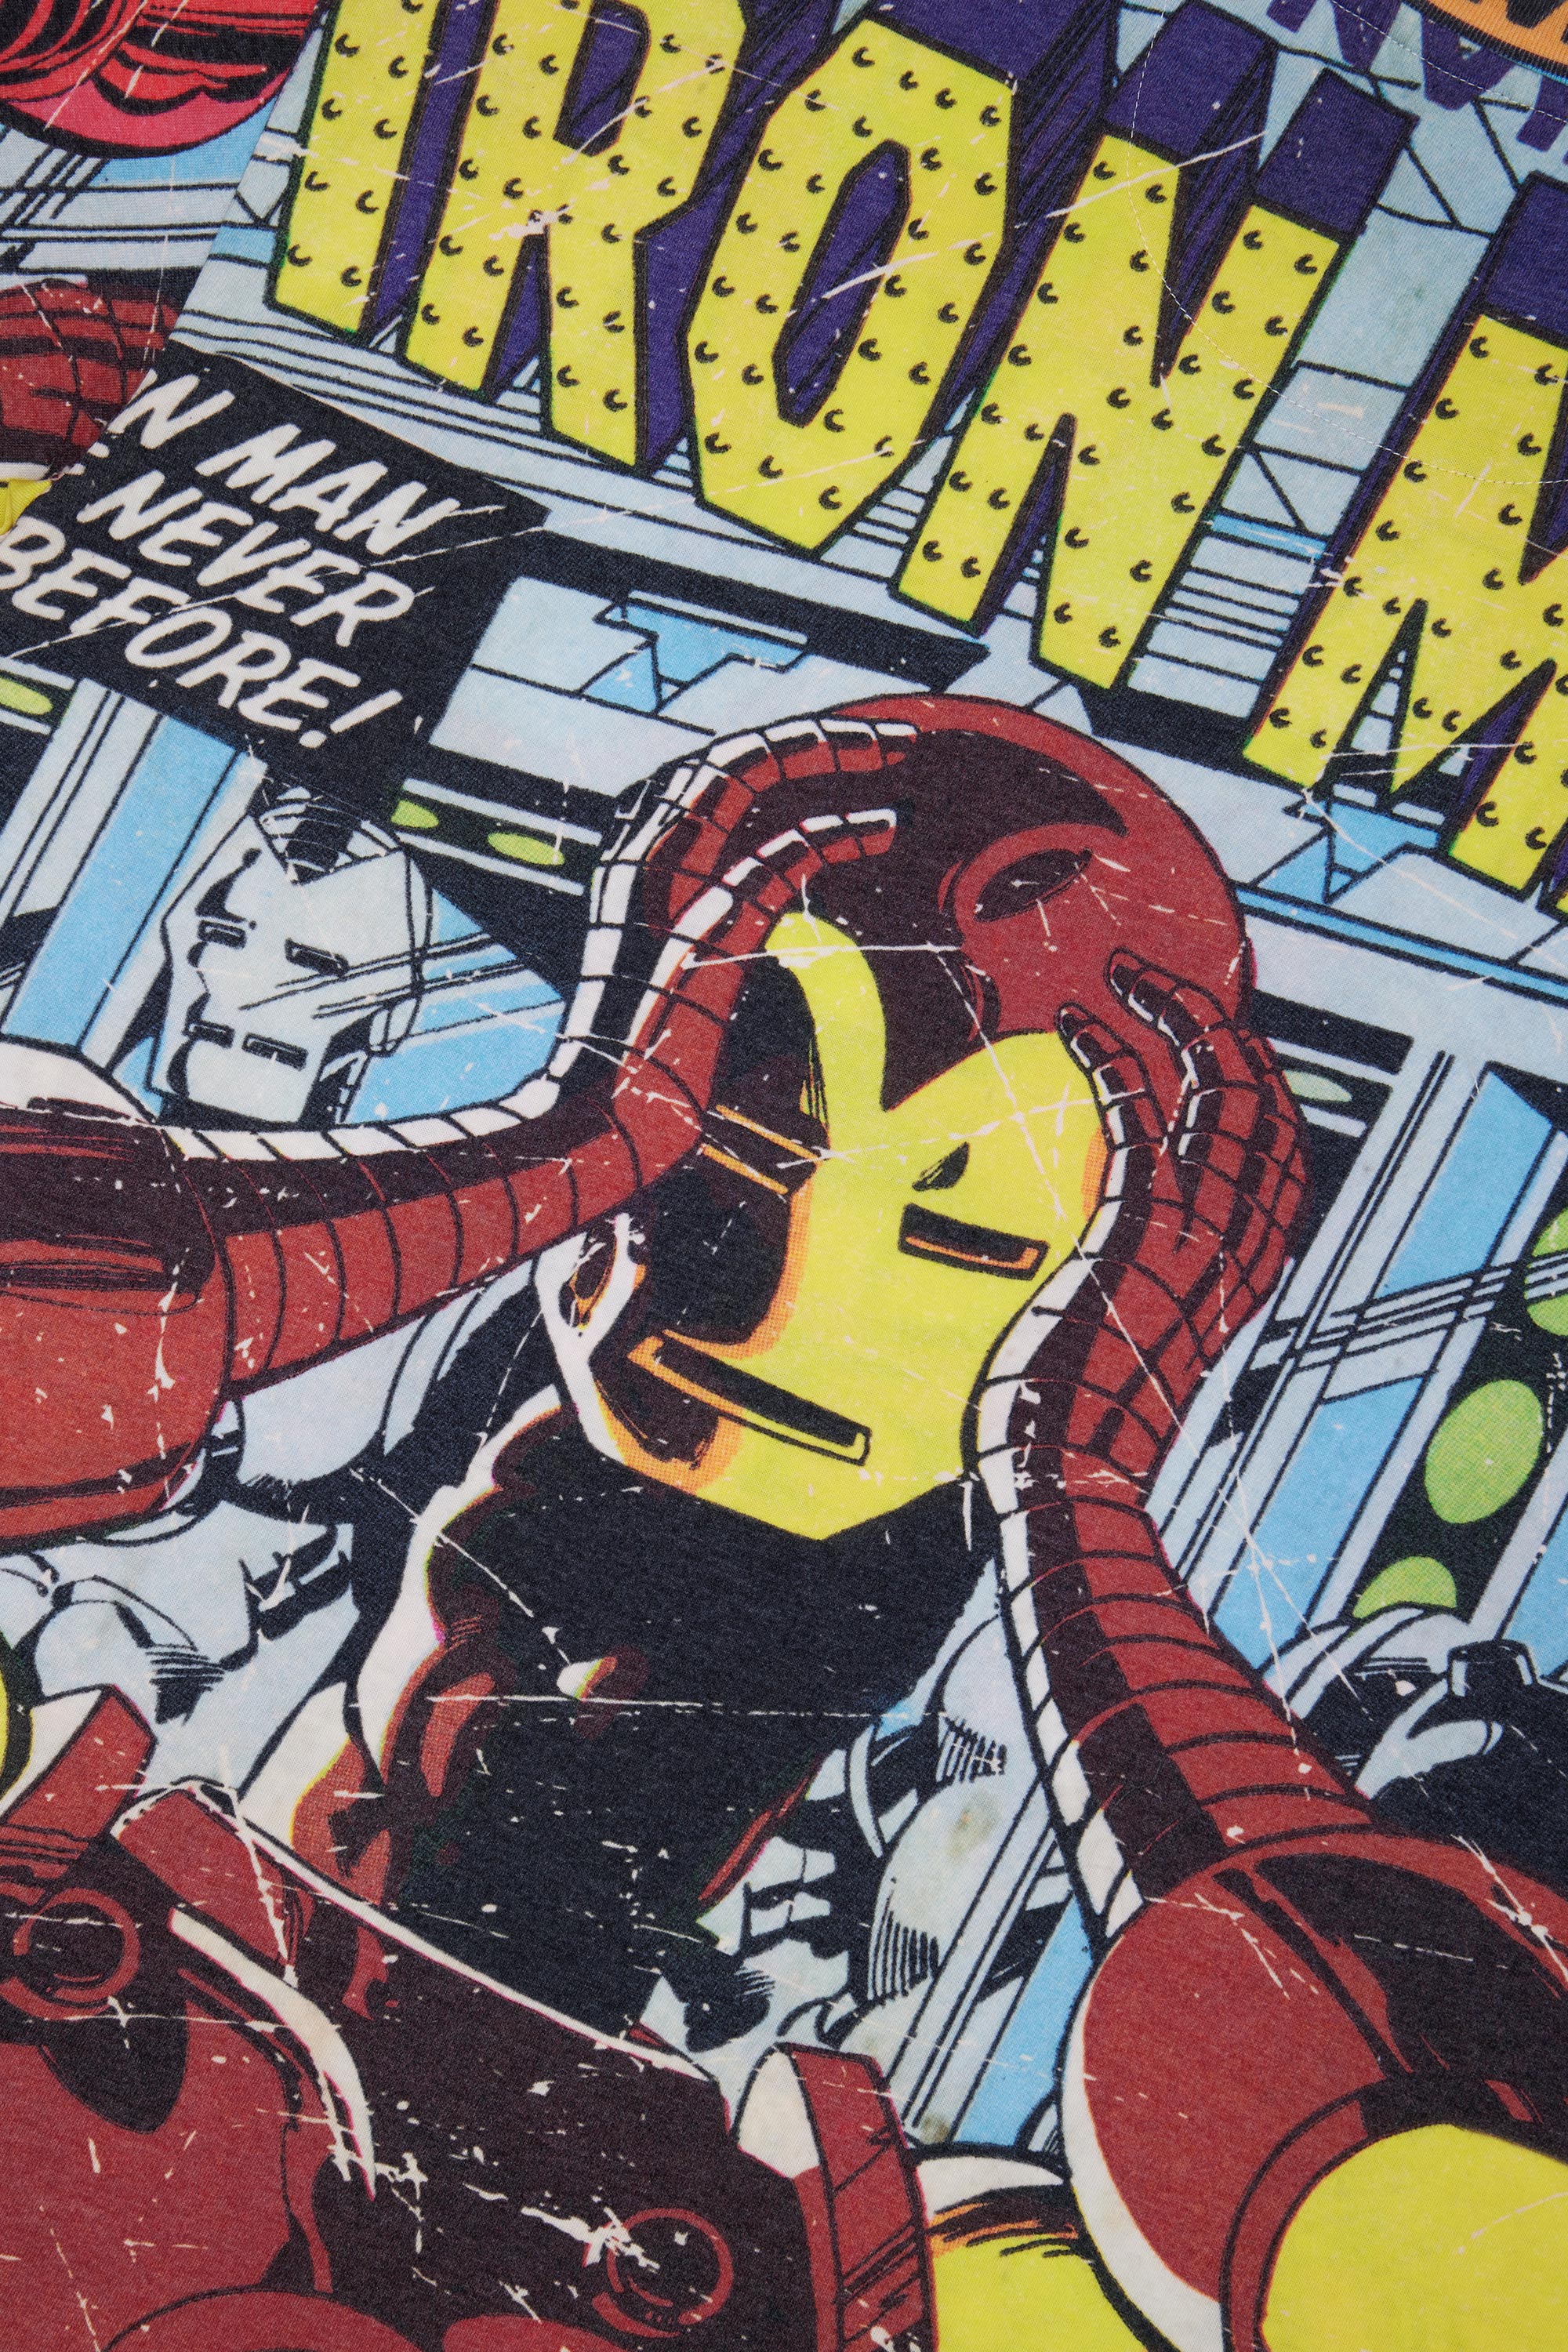 TF x Marvel Iron Man Comic Tee - Teddy Fresh